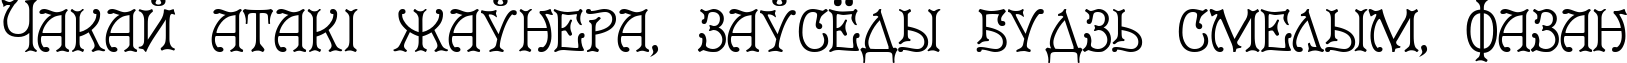 Пример написания шрифтом Le Grand текста на белорусском